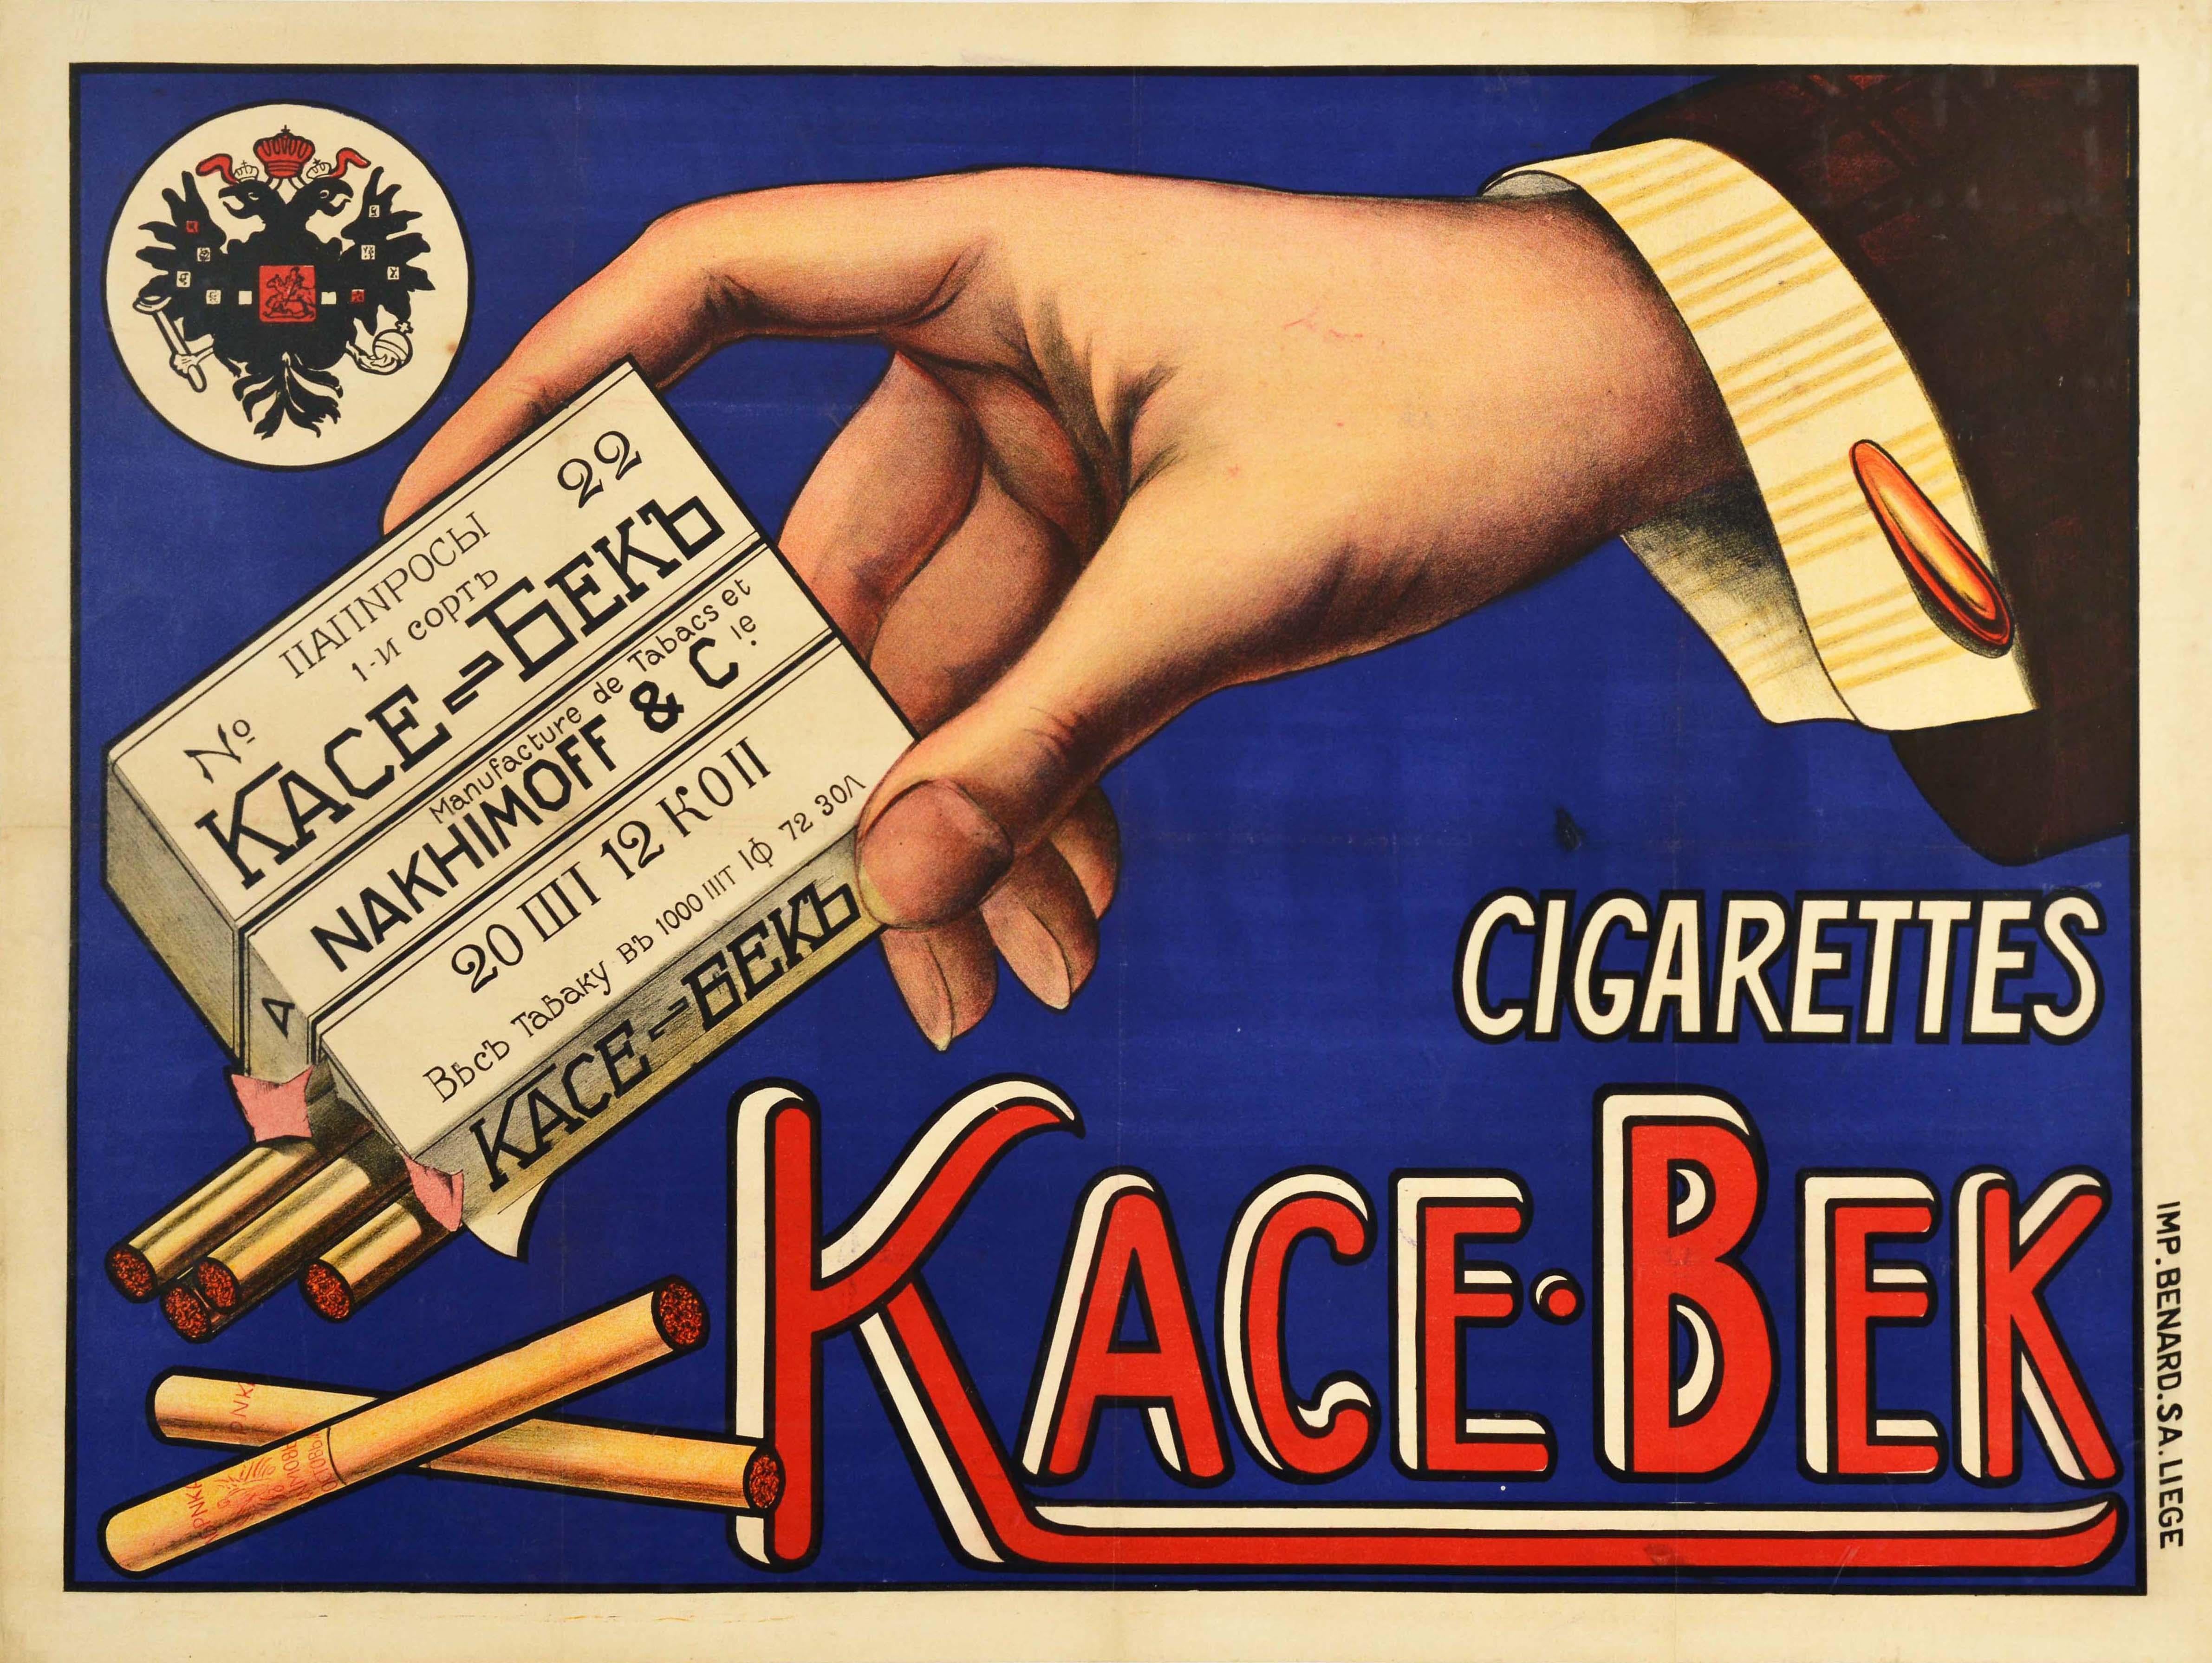 Unknown Print - Original Antique Advertising Poster KaceBek Cigarettes Tobacco Imperial Russia